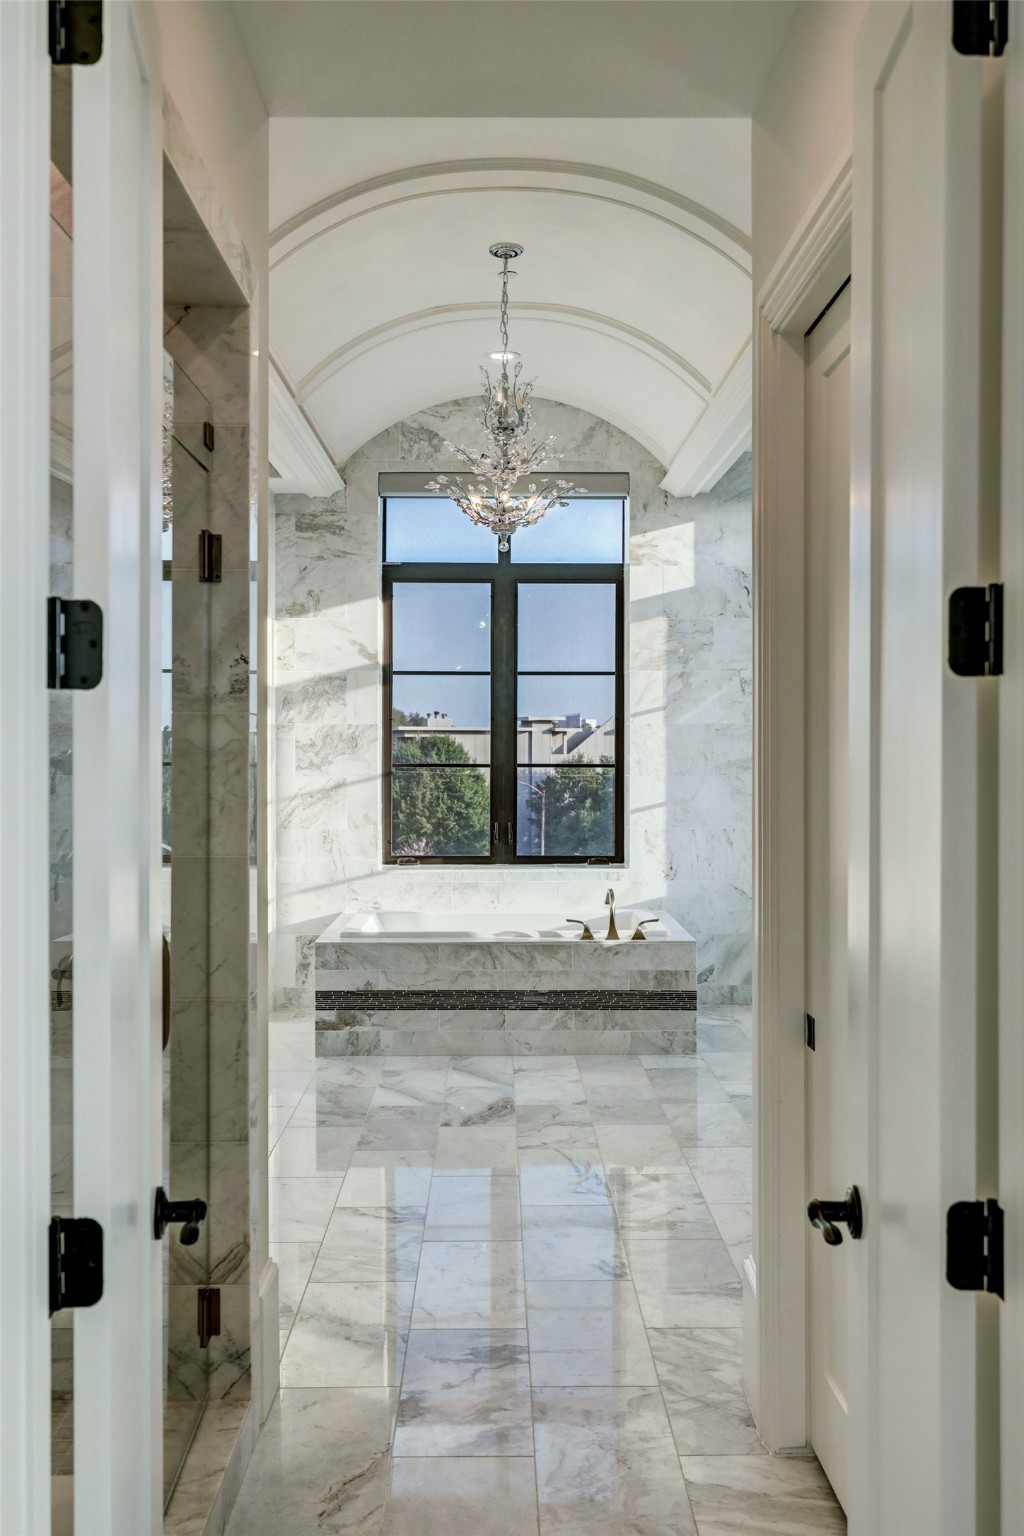 Primary bath boasts a barrel ceiling and designer light fixtures.